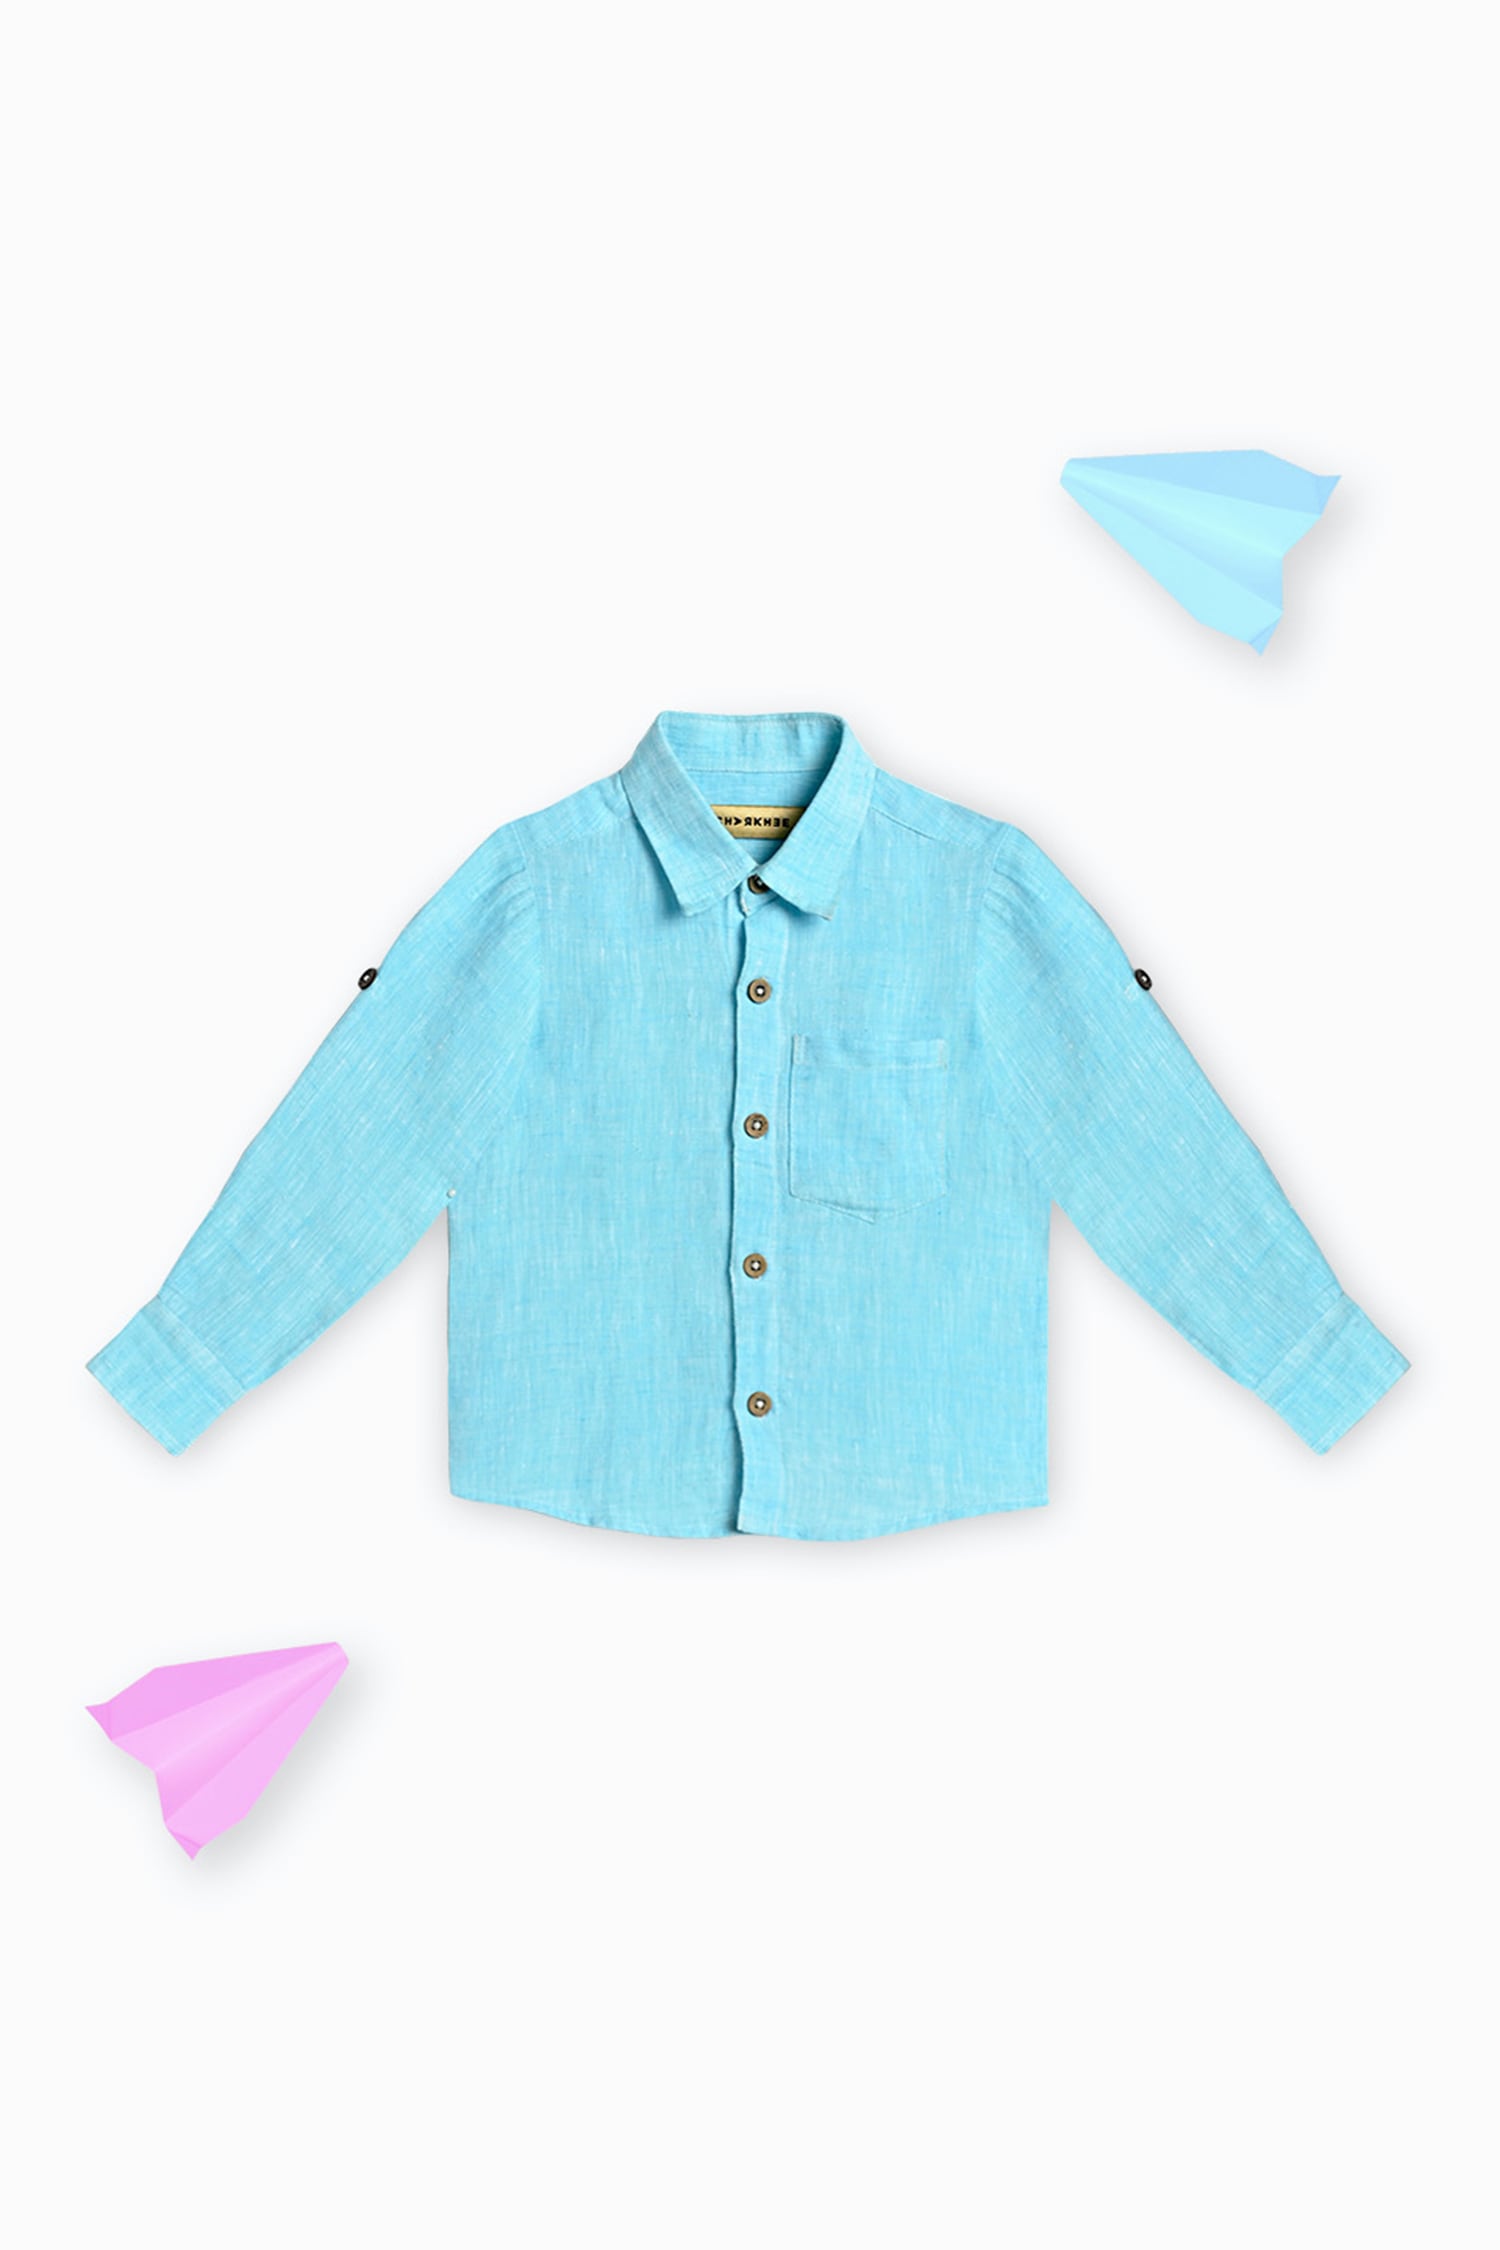 Buy Linen Plain Shirt by Charkhee at Aza Fashions